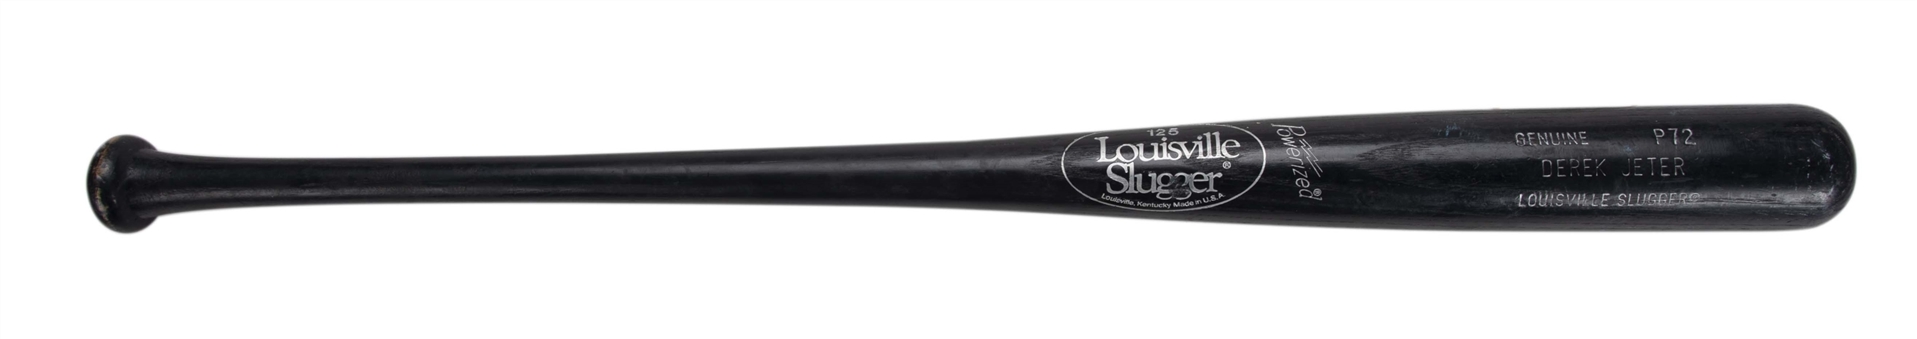 1994 Derek Jeter Game Used Louisville Slugger P72 Model Bat- One Of The Finest Early Career Jeter Bats- (PSA/DNA GU 9.5)